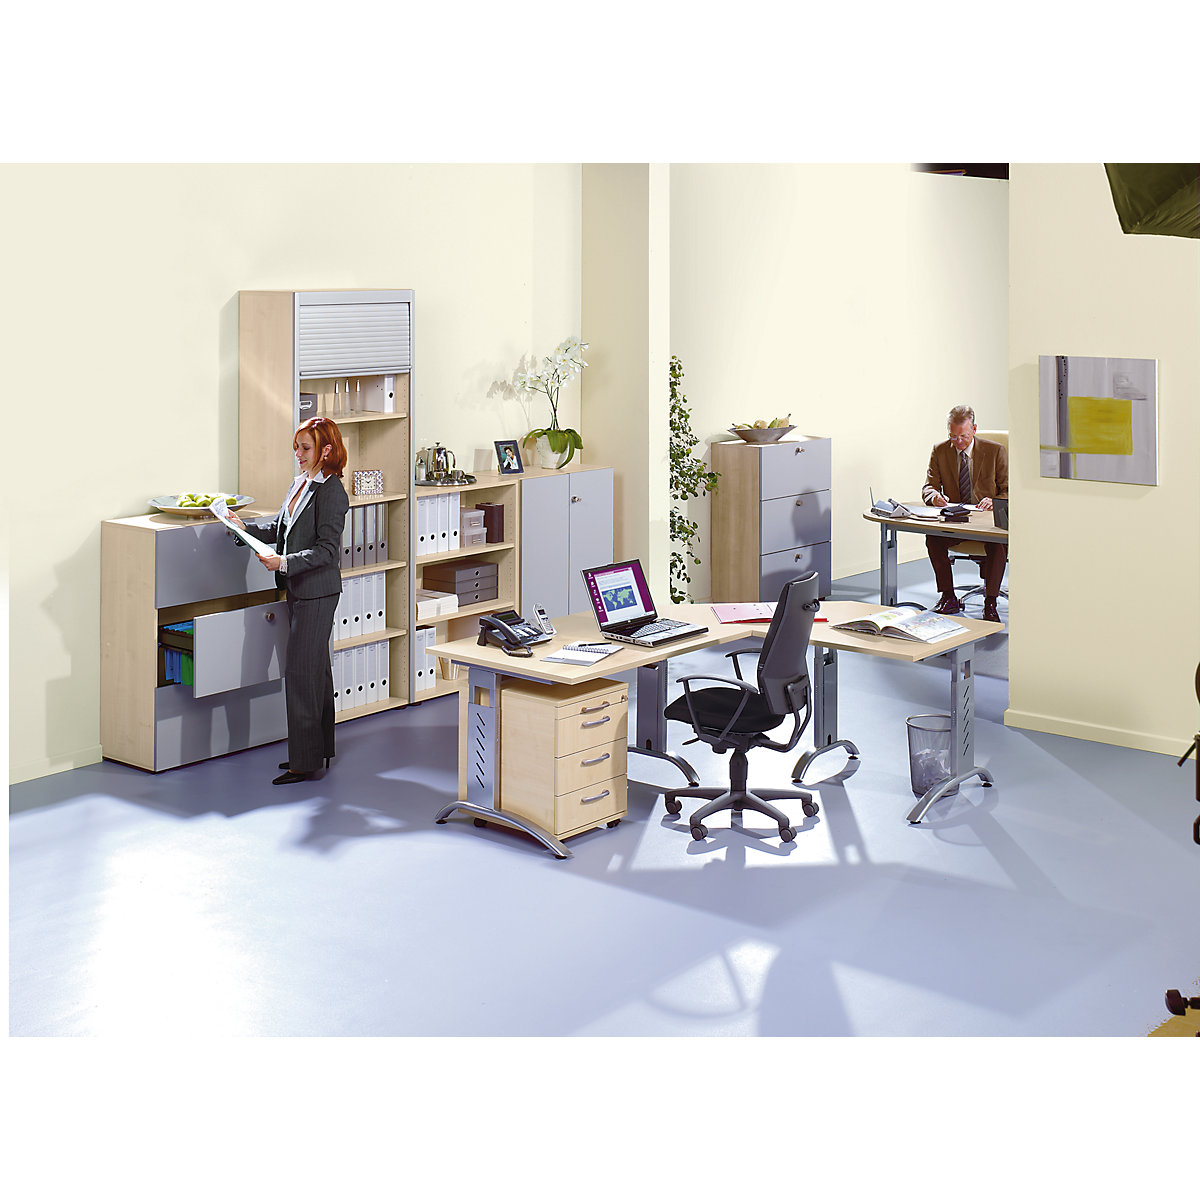 ANNY   Office Shelf Unit Pdplarge Mrd  00036044 Kk Ret 